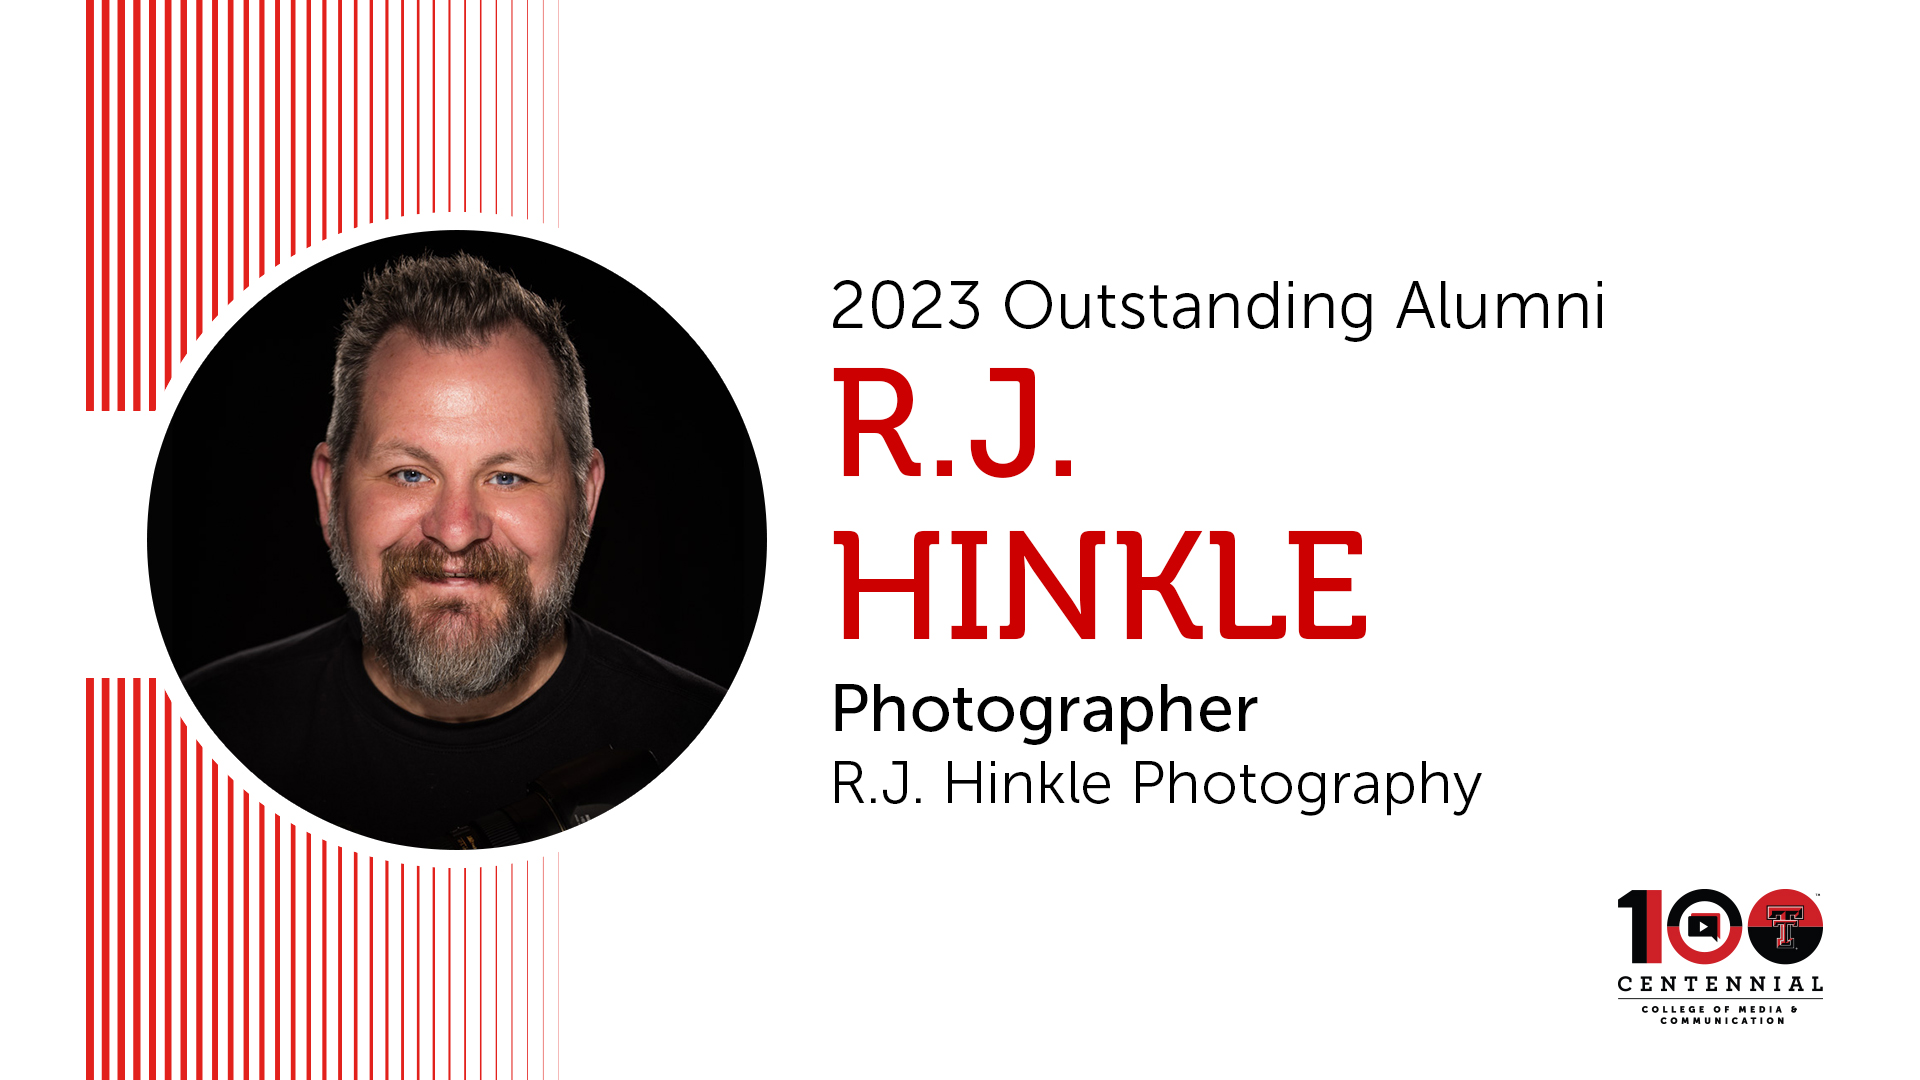 R.J. Hinkle